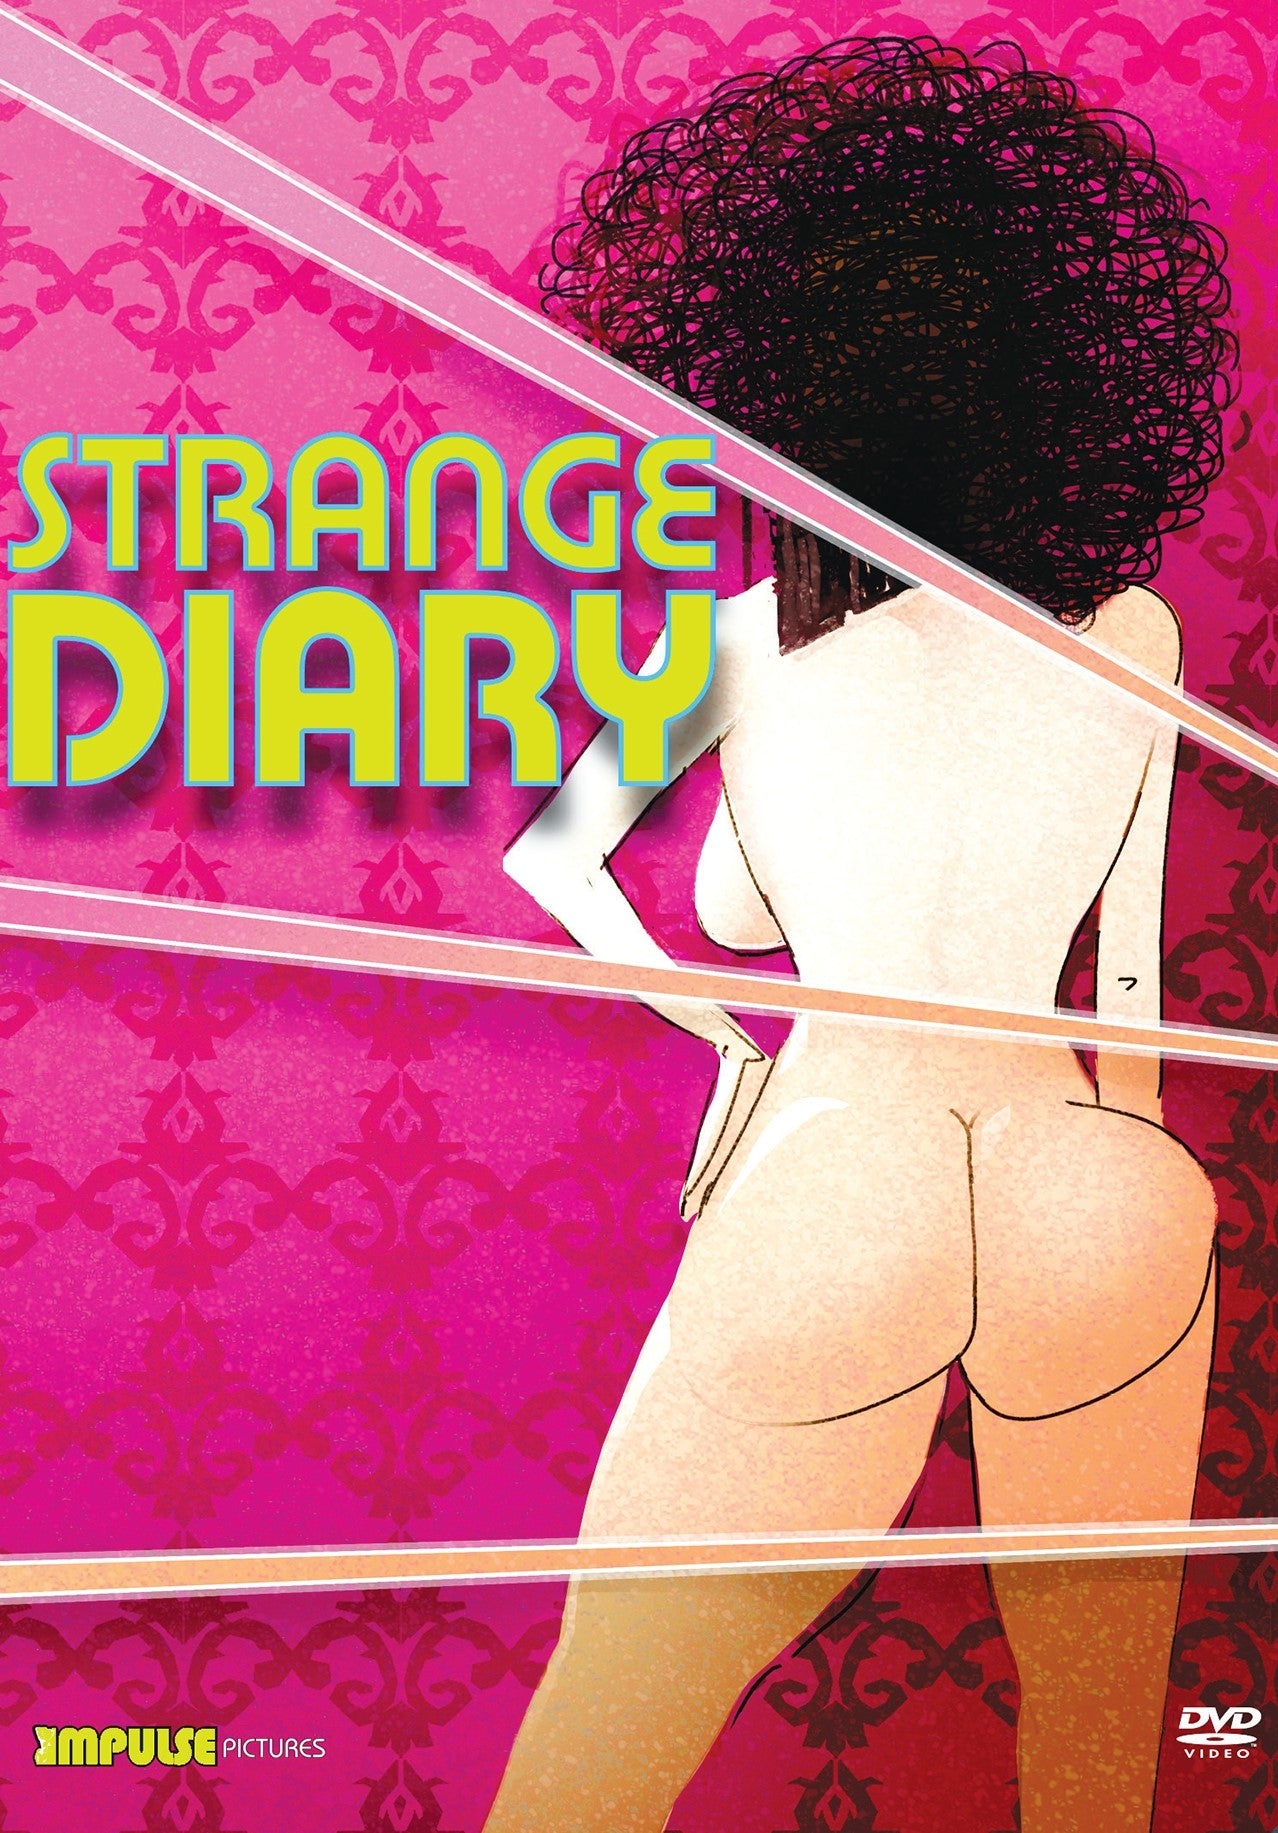 STRANGE DIARY DVD